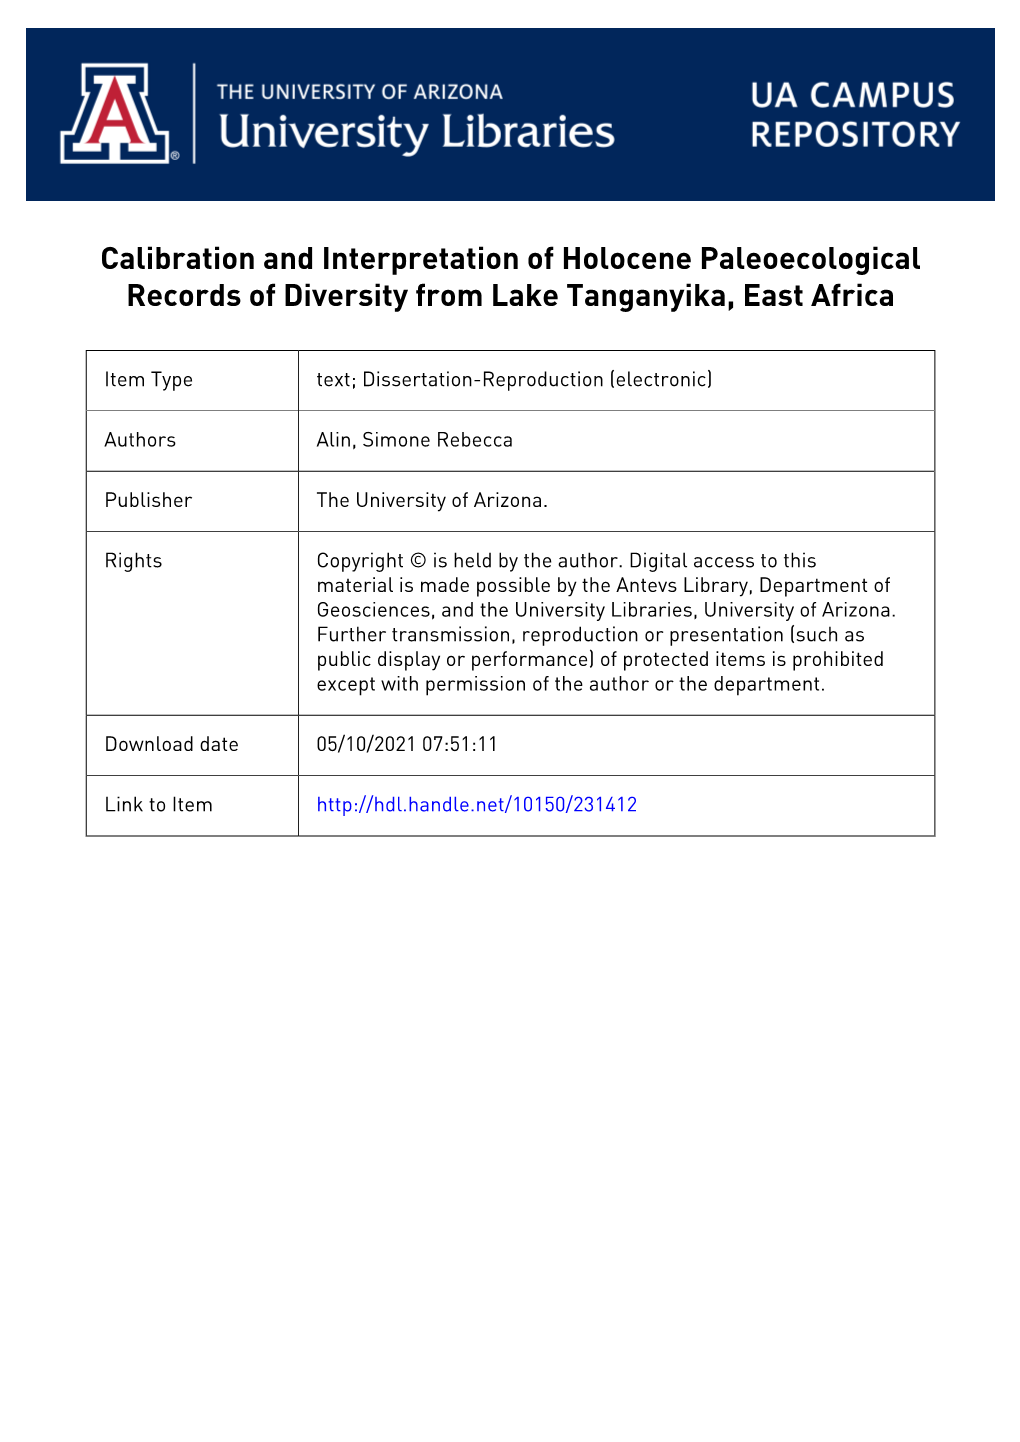 Calibration and Interpretation of Holocene Paleoecological Records of Diversity from Lake Tanganyika, East Africa